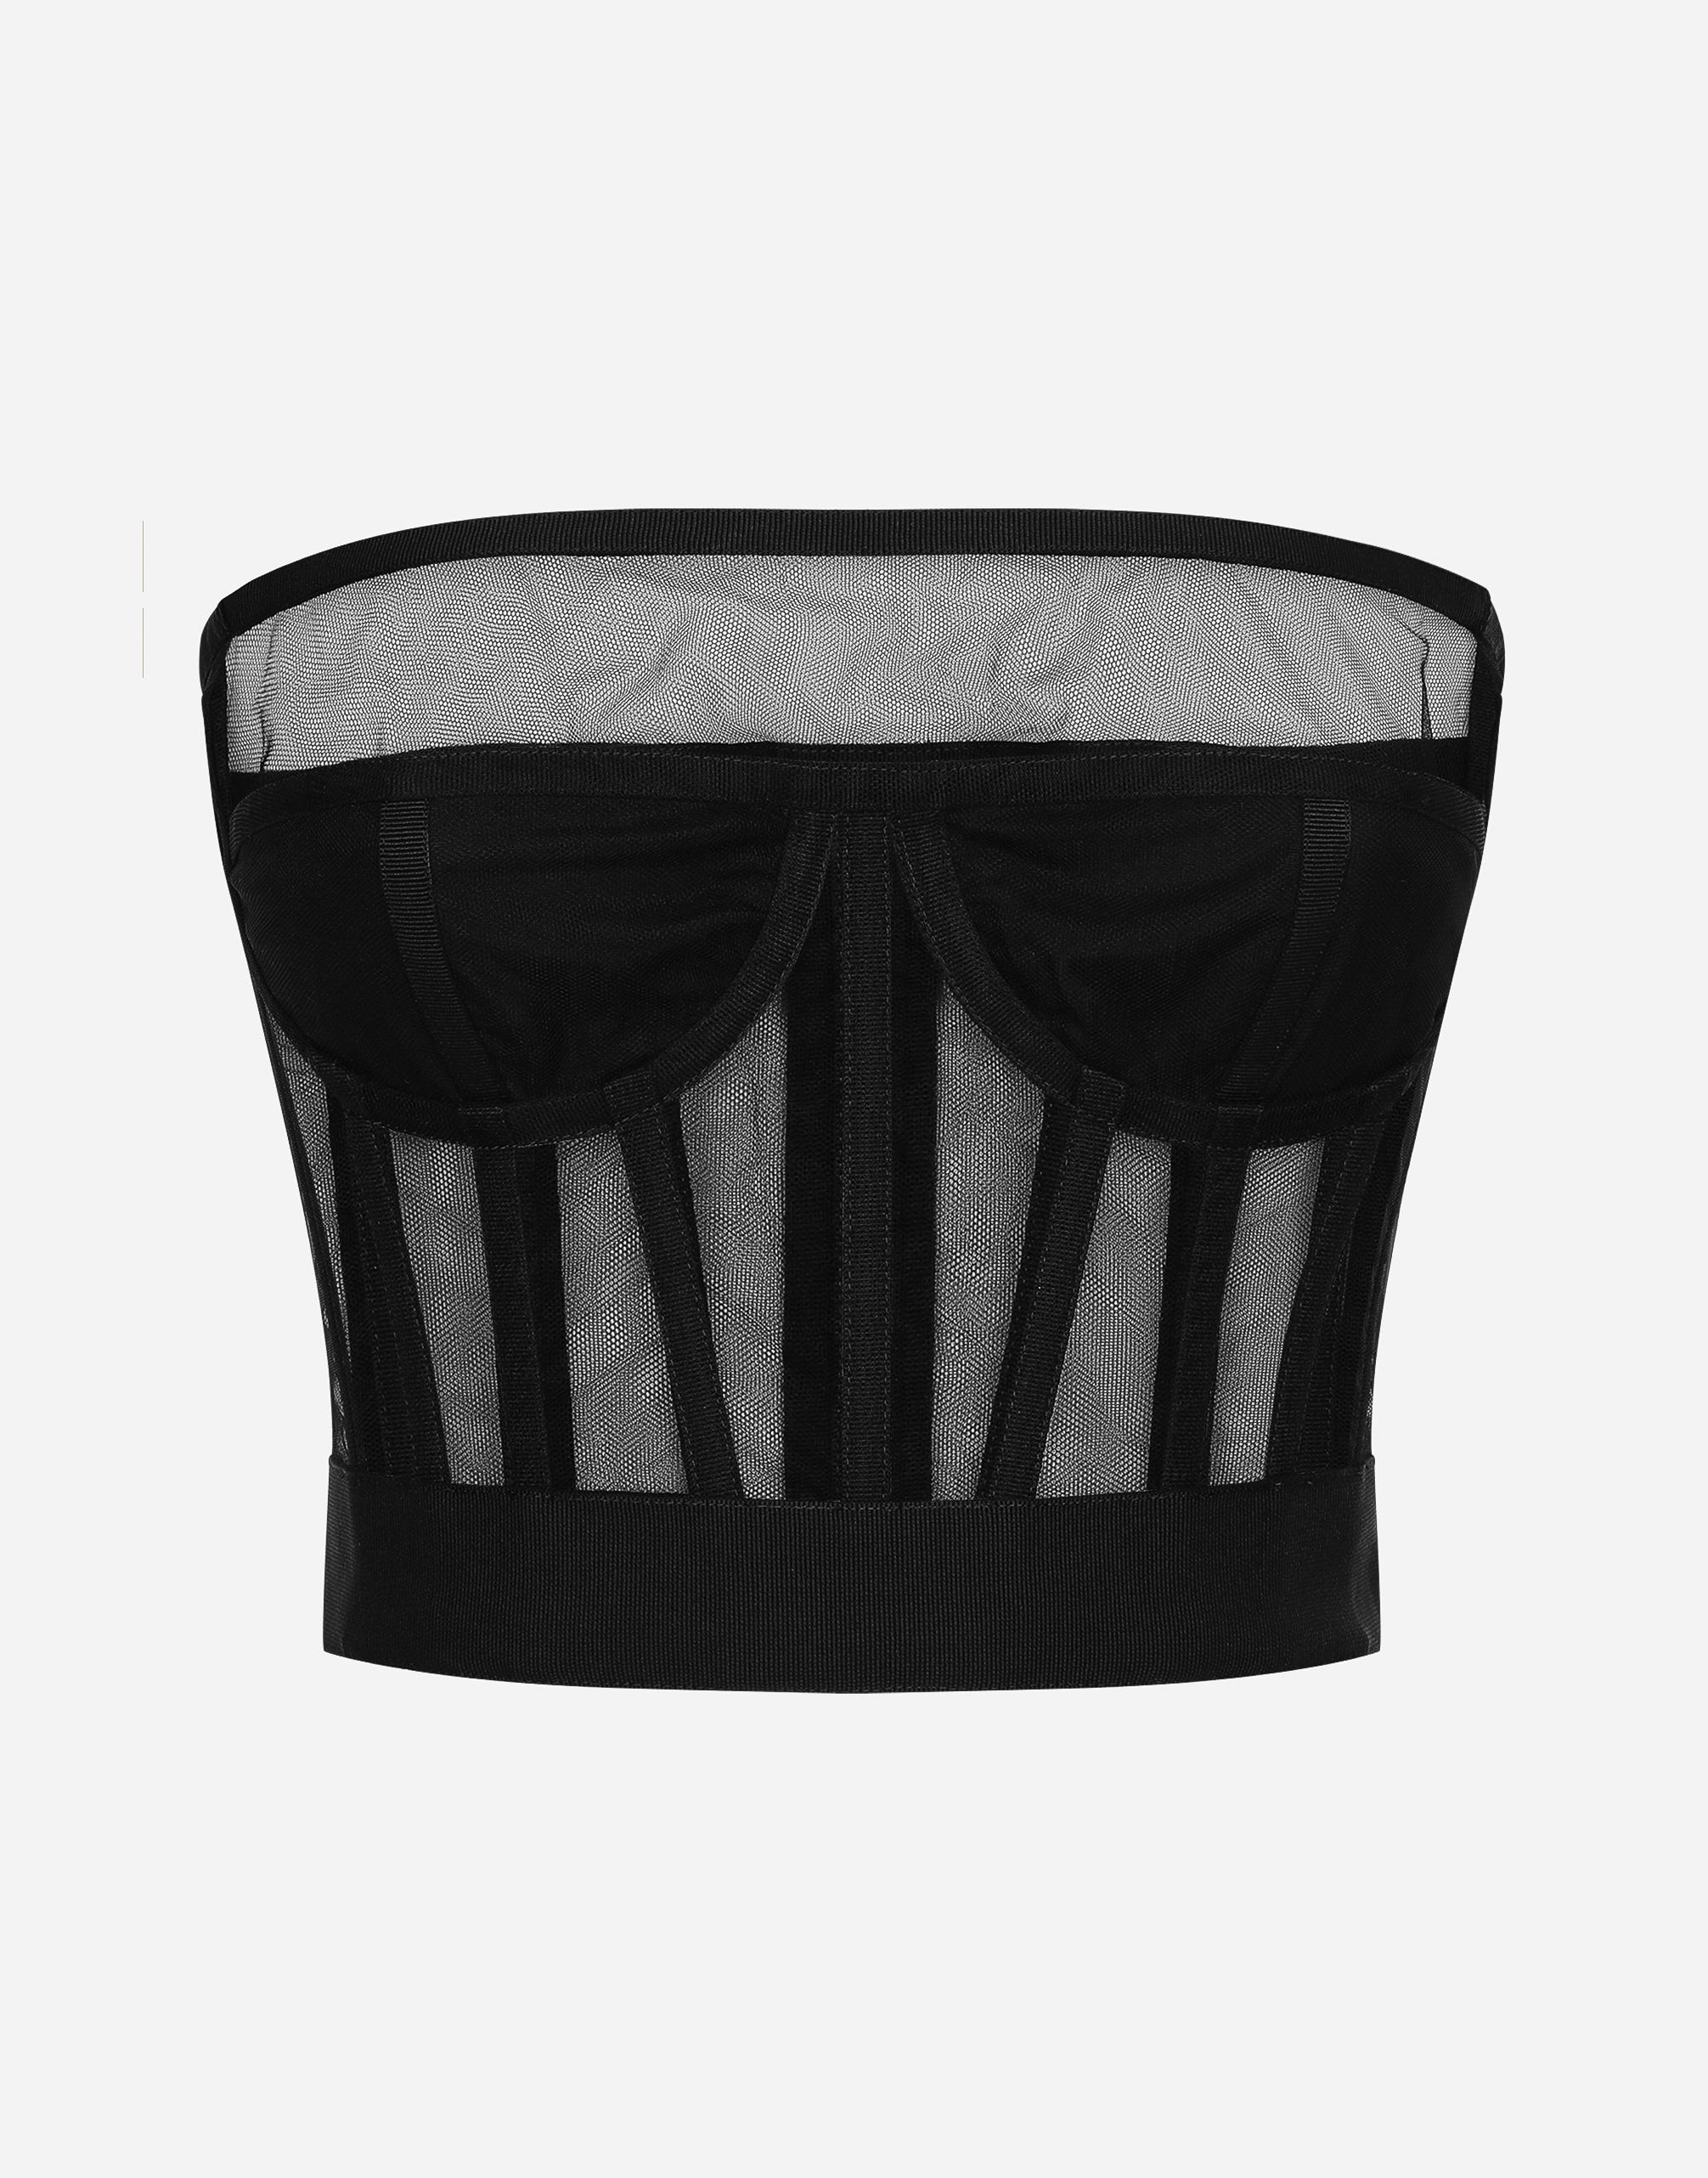 Dolce & Gabbana Strapless Corset Top in Black